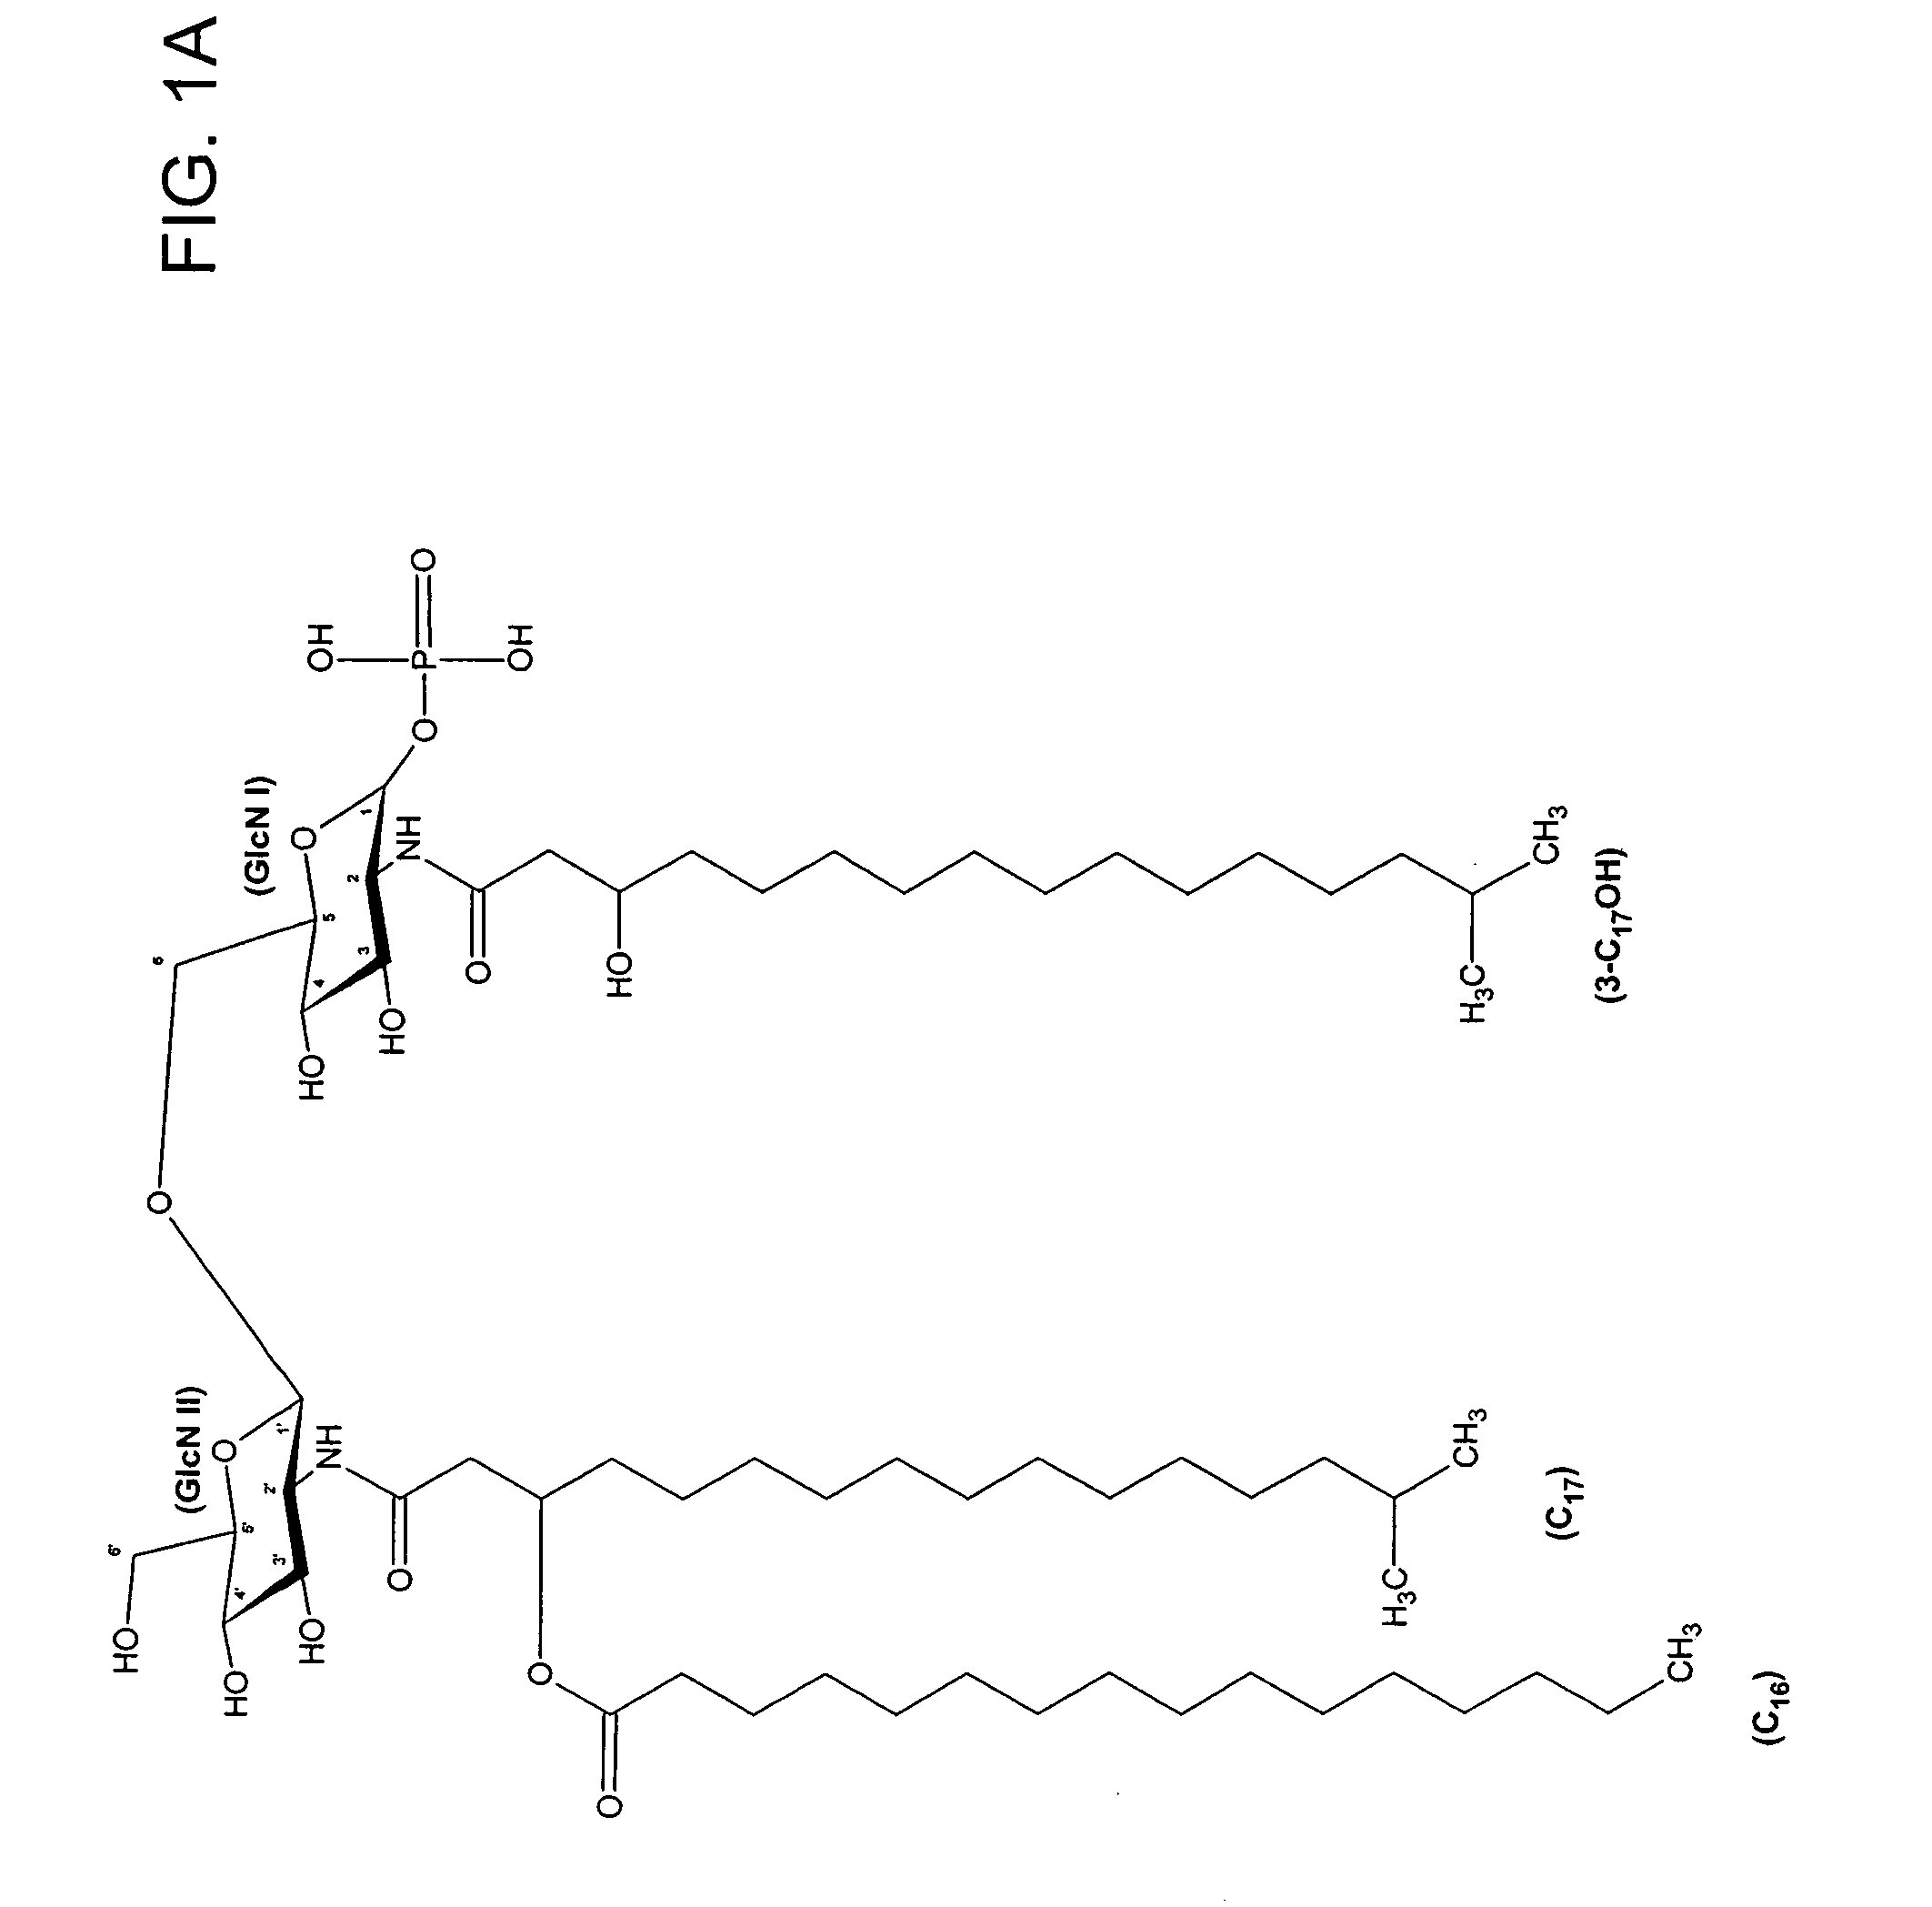 Porphyromonas gingivalis 1435/1449 LPS as an immune modulator